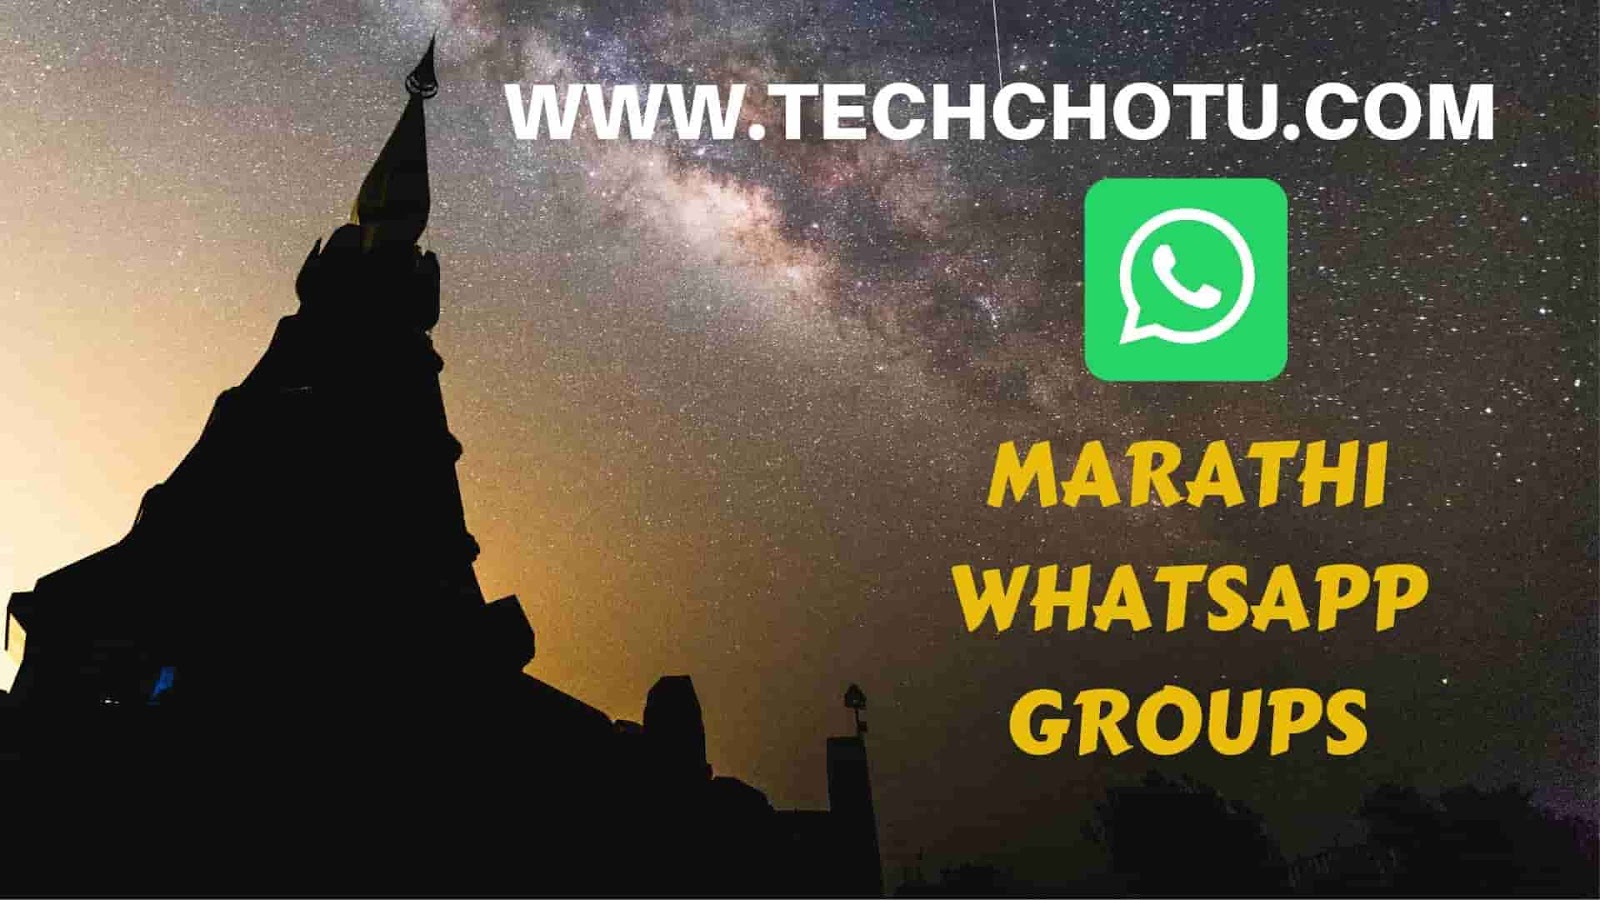 Xxx Group Marathi - MARATHI WHATSAPP GROUP LINKS - TECHCHOTU:WhatsApp Group Links 2020 ...